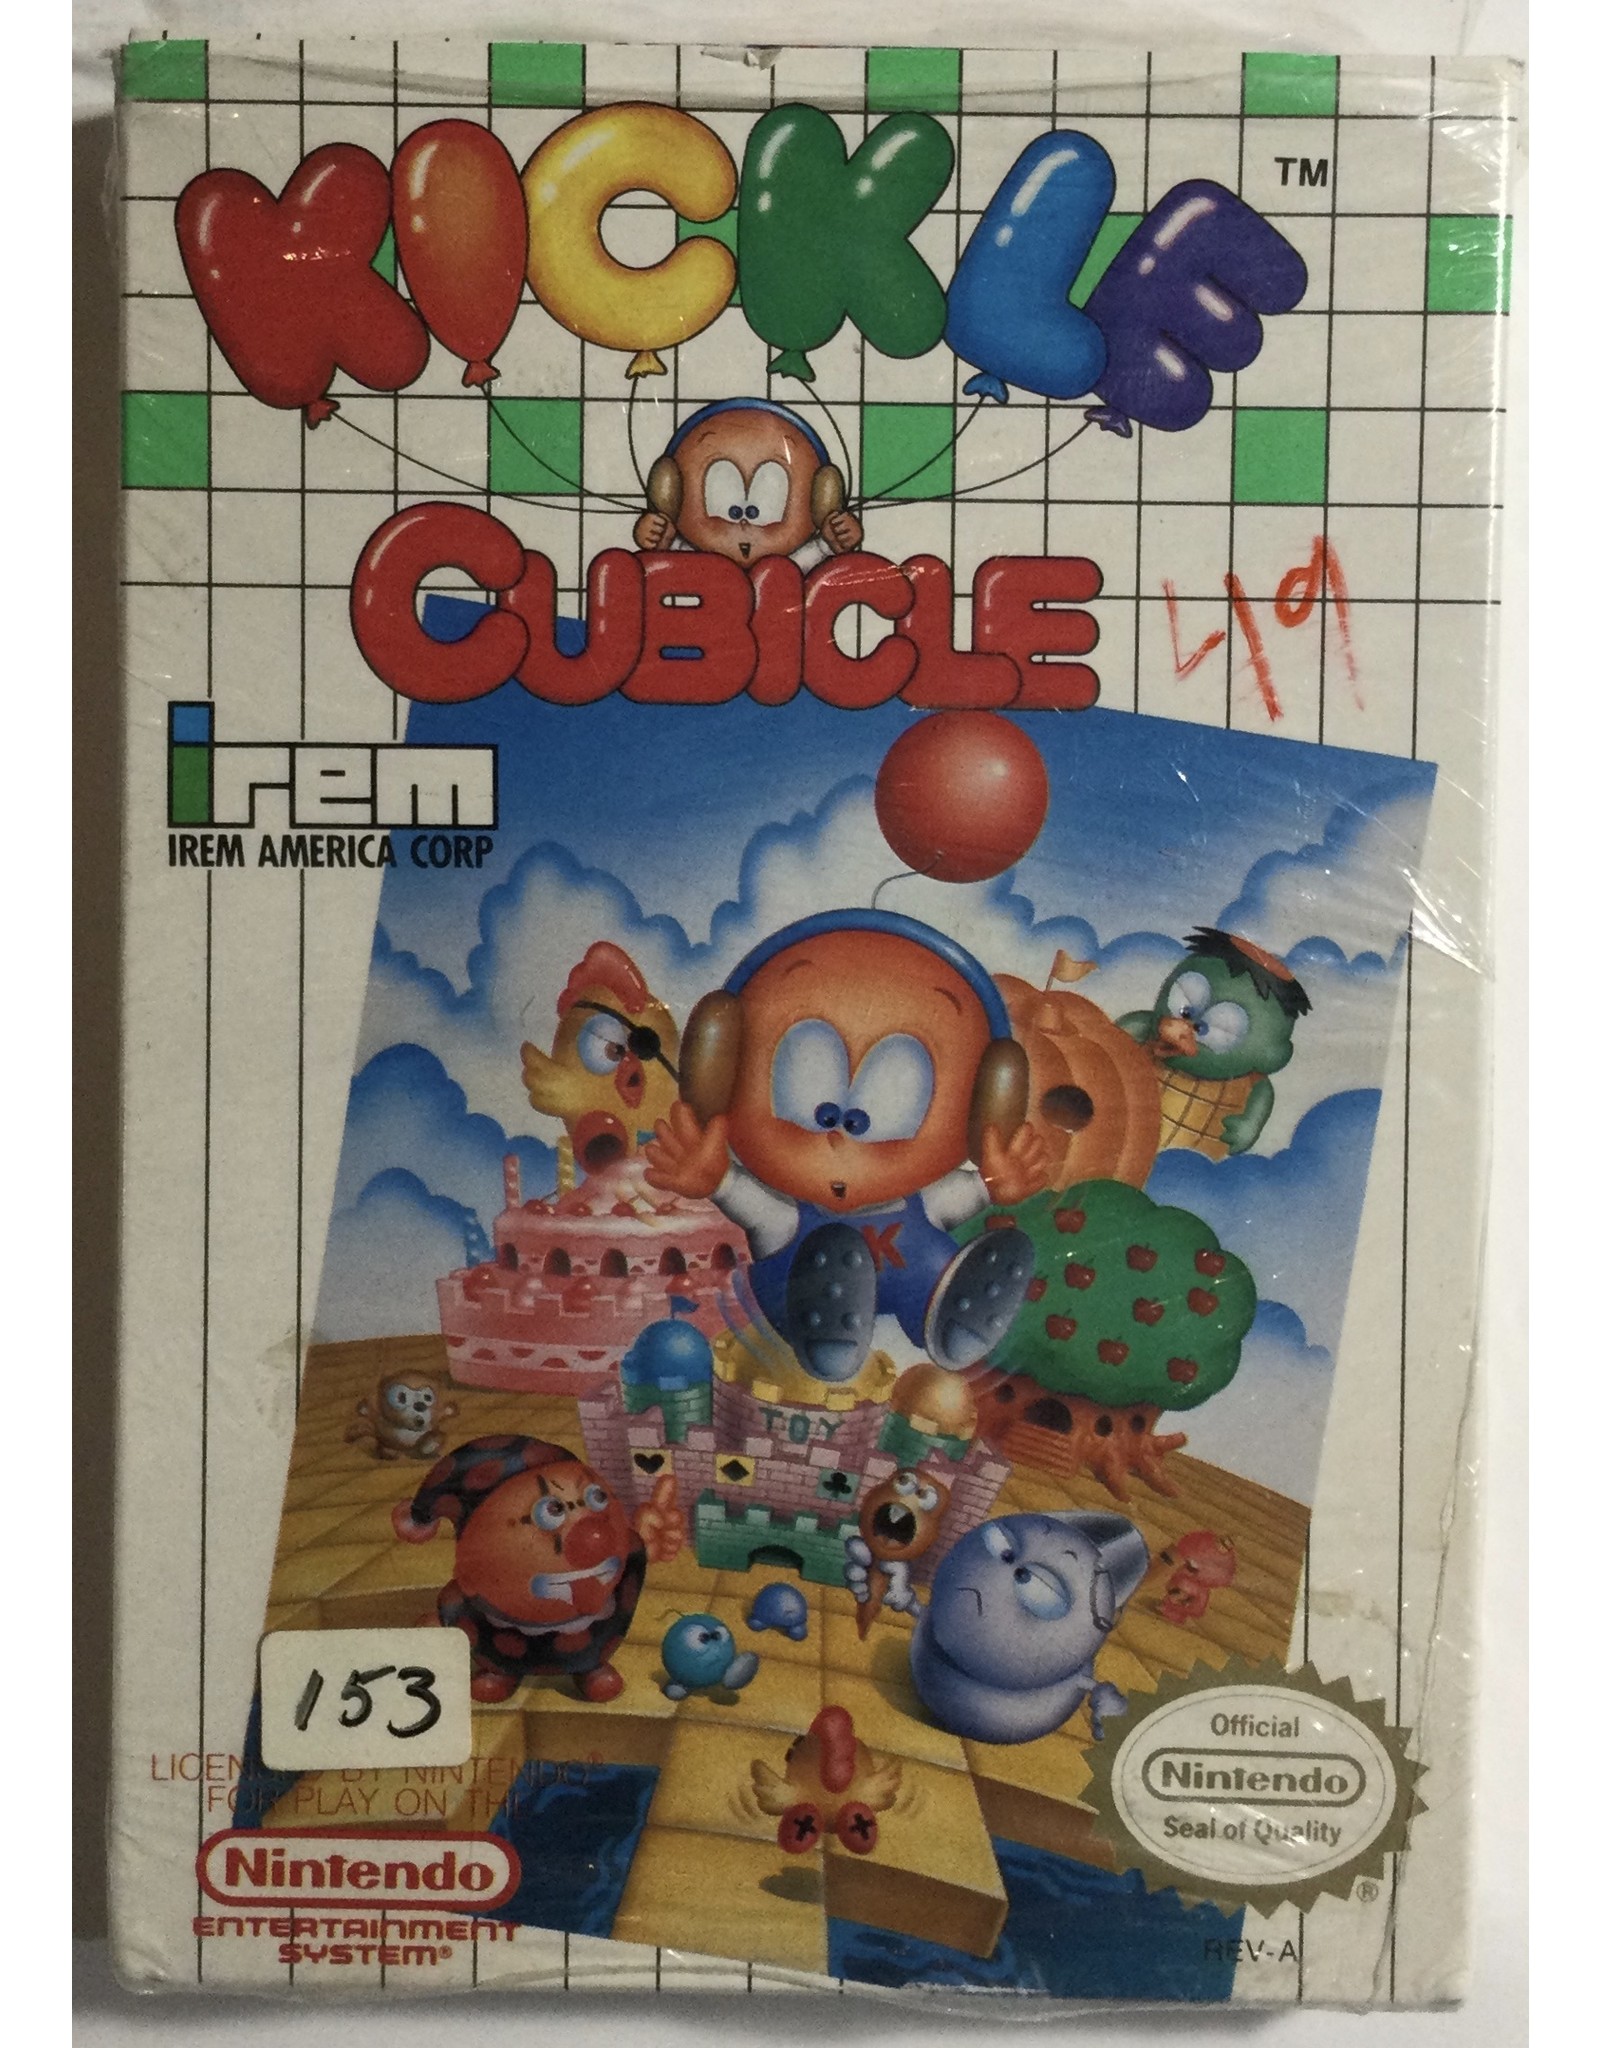 irem Kickle Cubicle for Nintendo Entertainment system (NES)